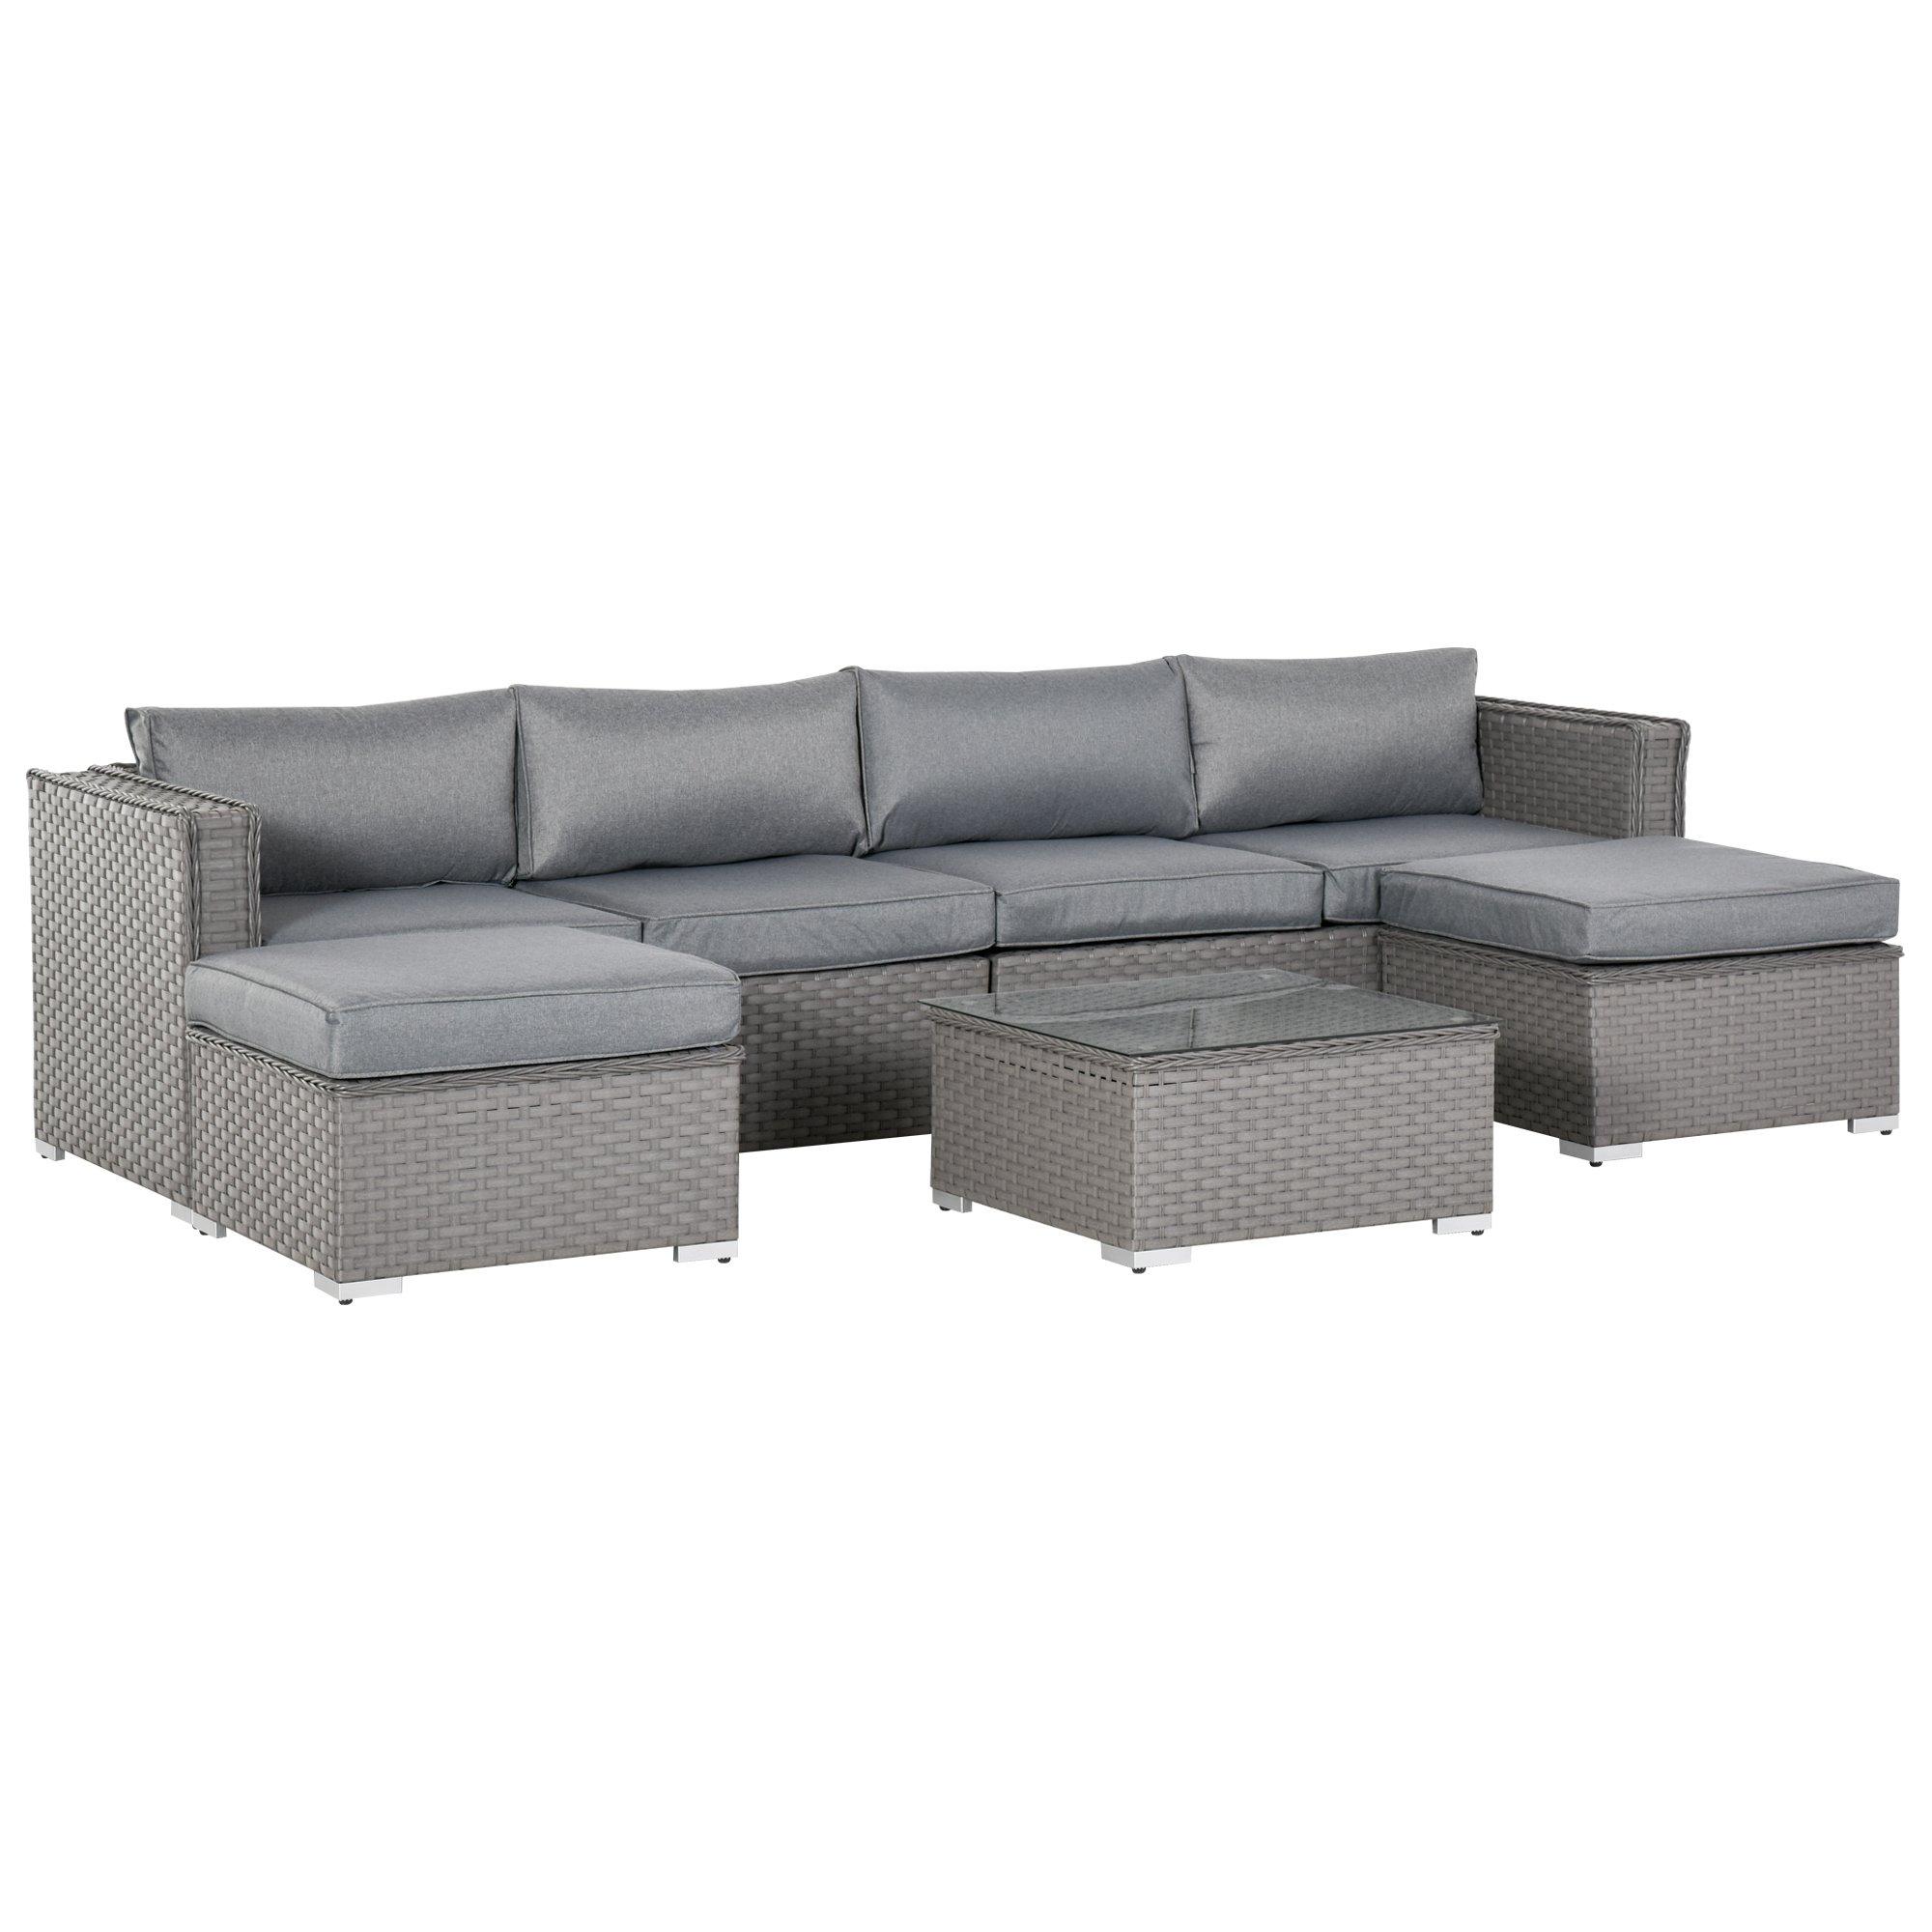 5 PCs PE Rattan Corner Sofa Set Outdoor Conservatory Furniture w/ Cushion